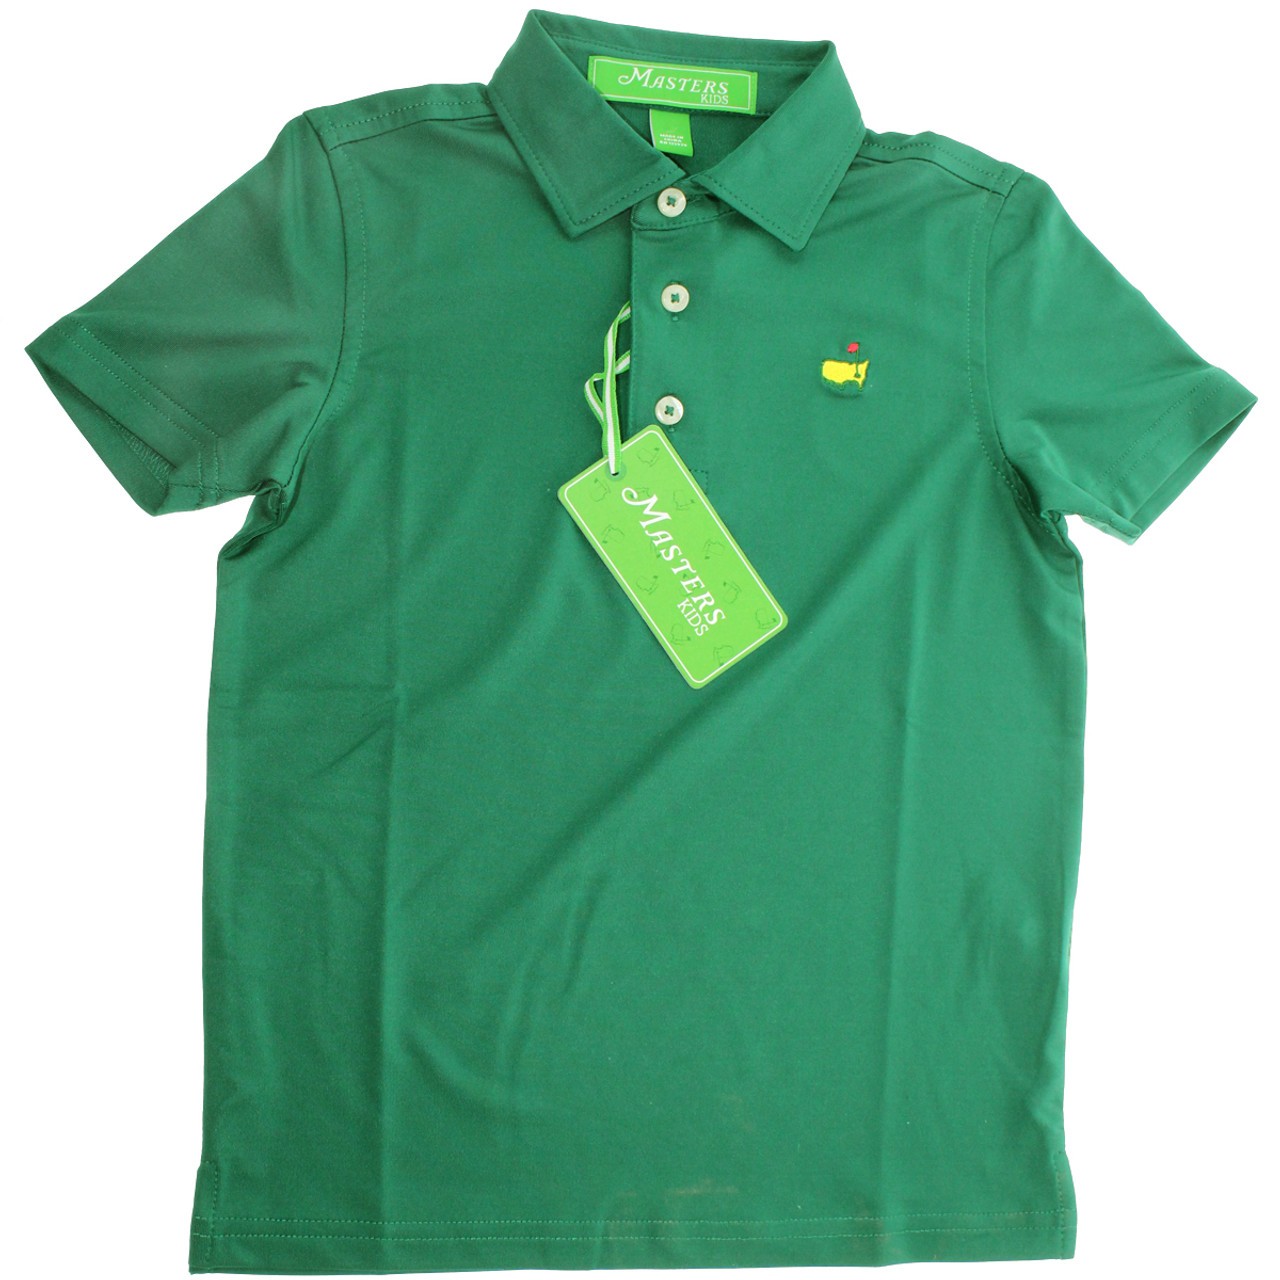 Masters Youth Performance Tech Golf Shirt - Green